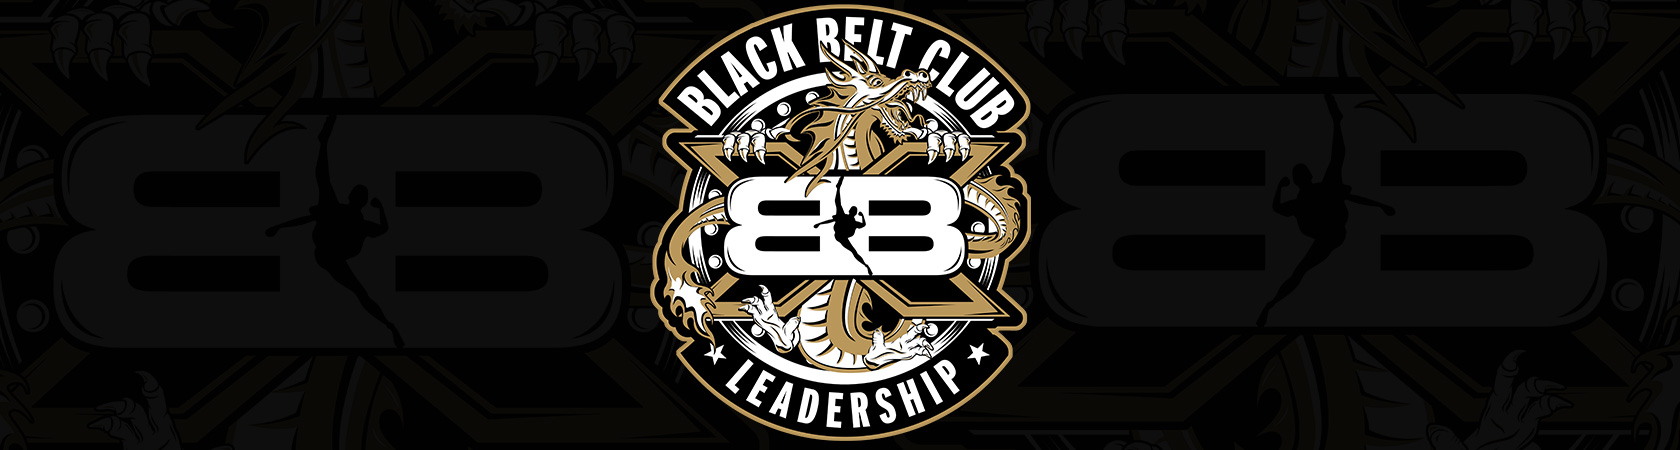 Black Belt club